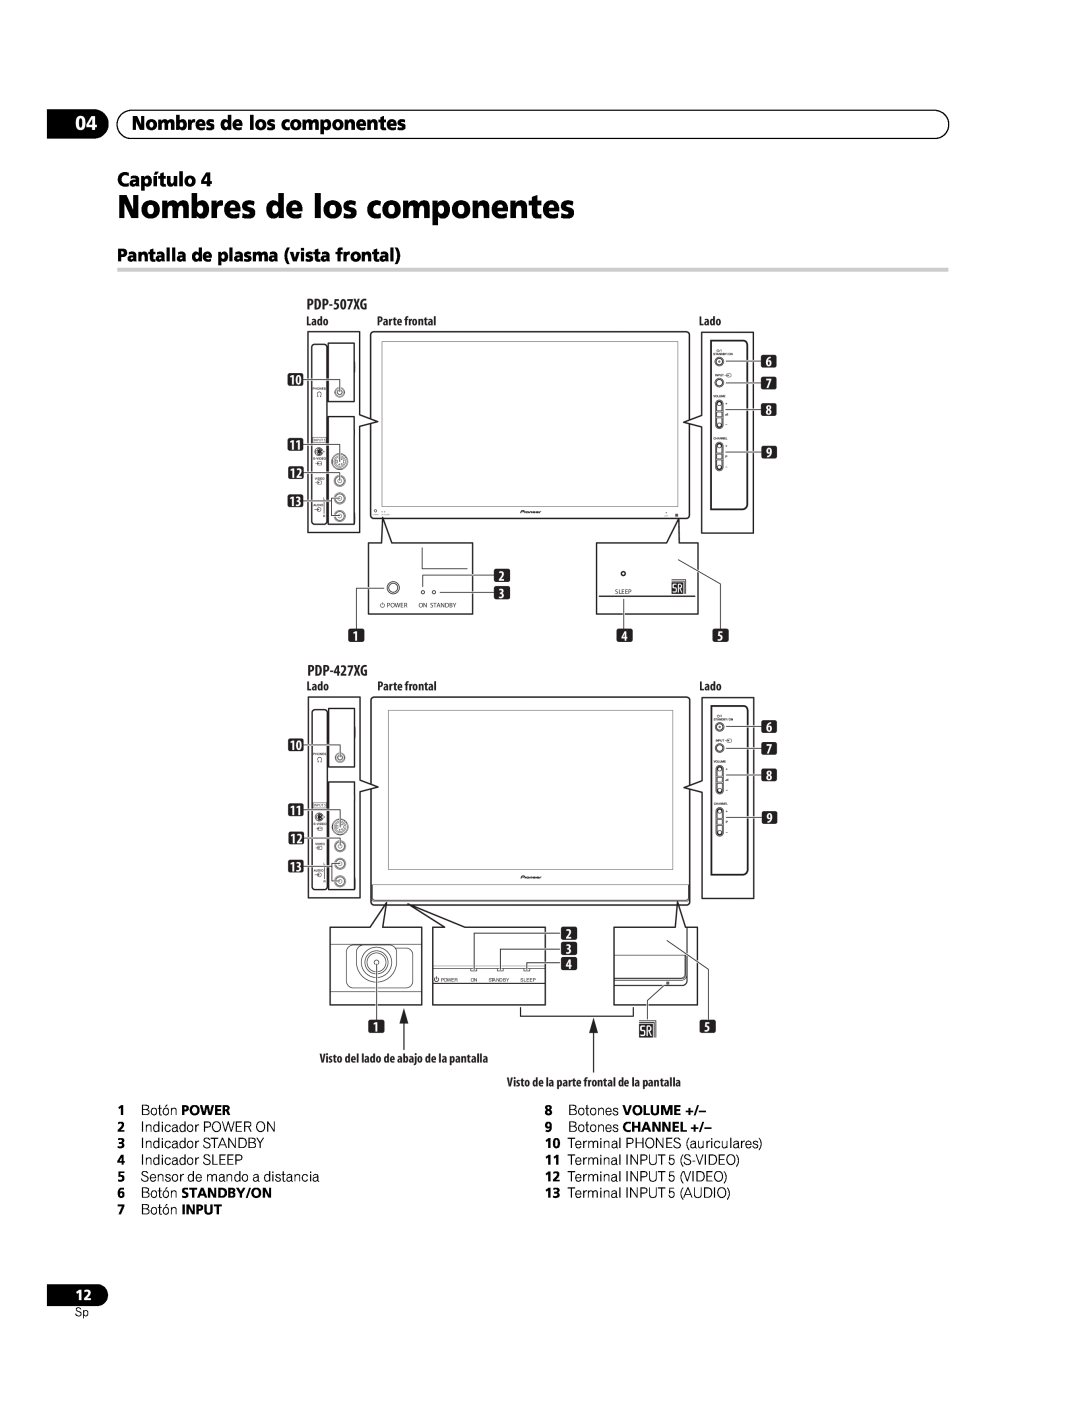 Pioneer PDP-427XG manual Nombres de los componentes Capítulo, Pantalla de plasma vista frontal, PDP-507XG 